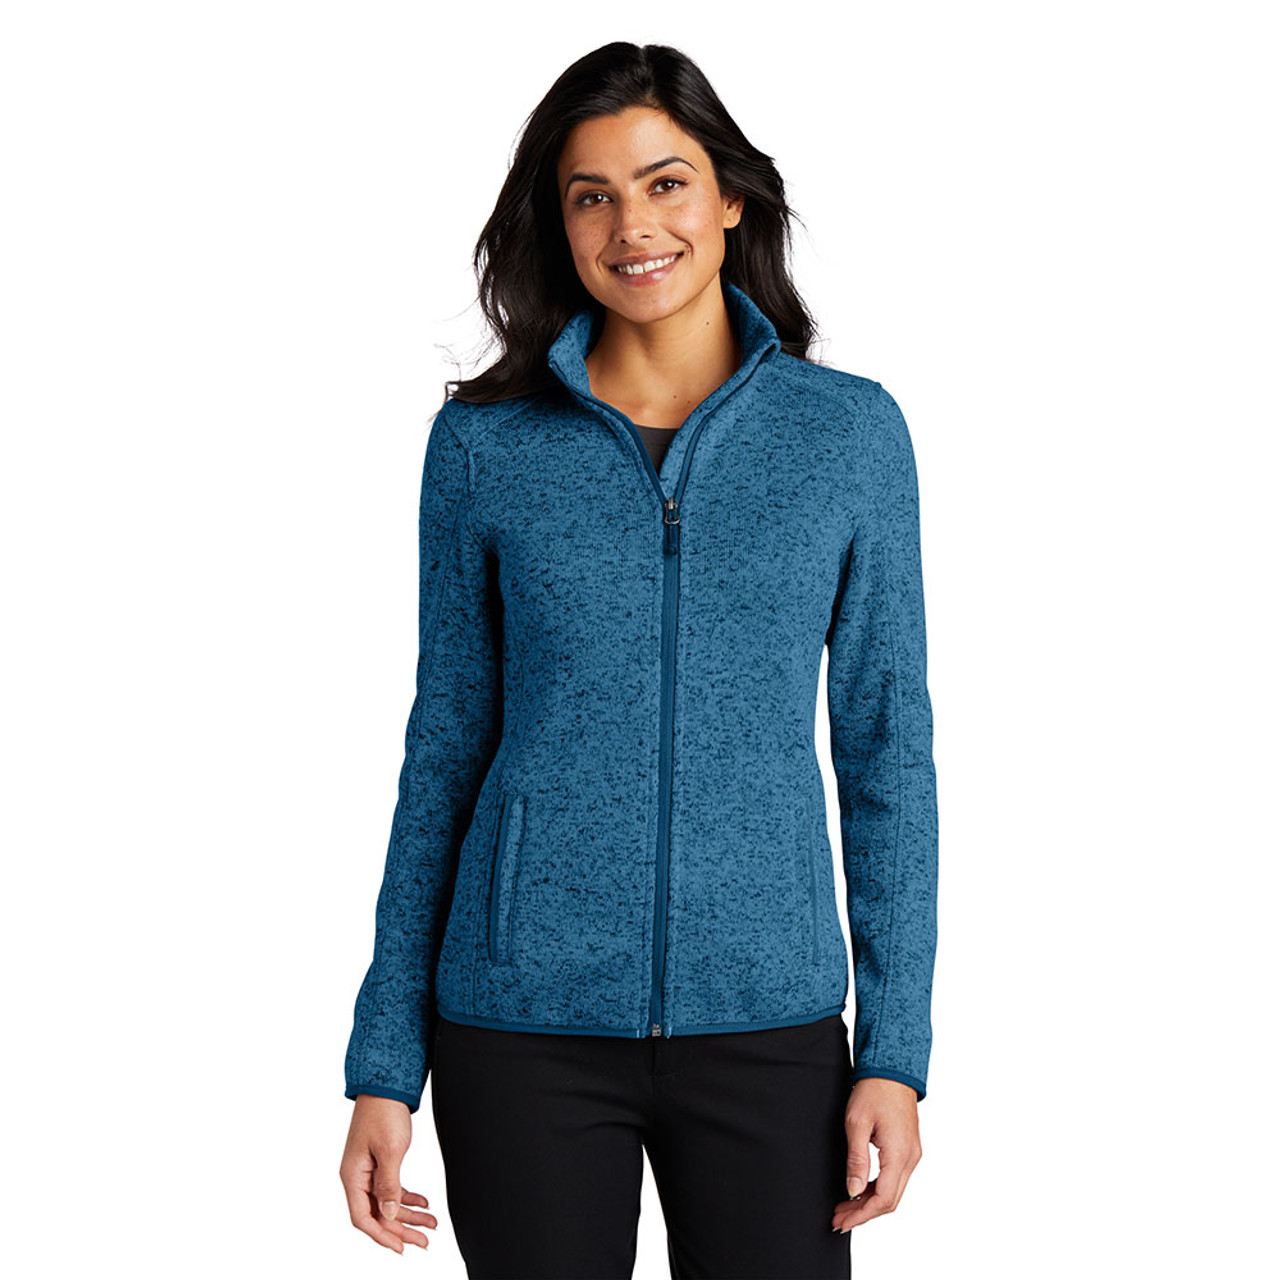 METRO CREDIT UNION - Ladies Sweater Fleece Jacket